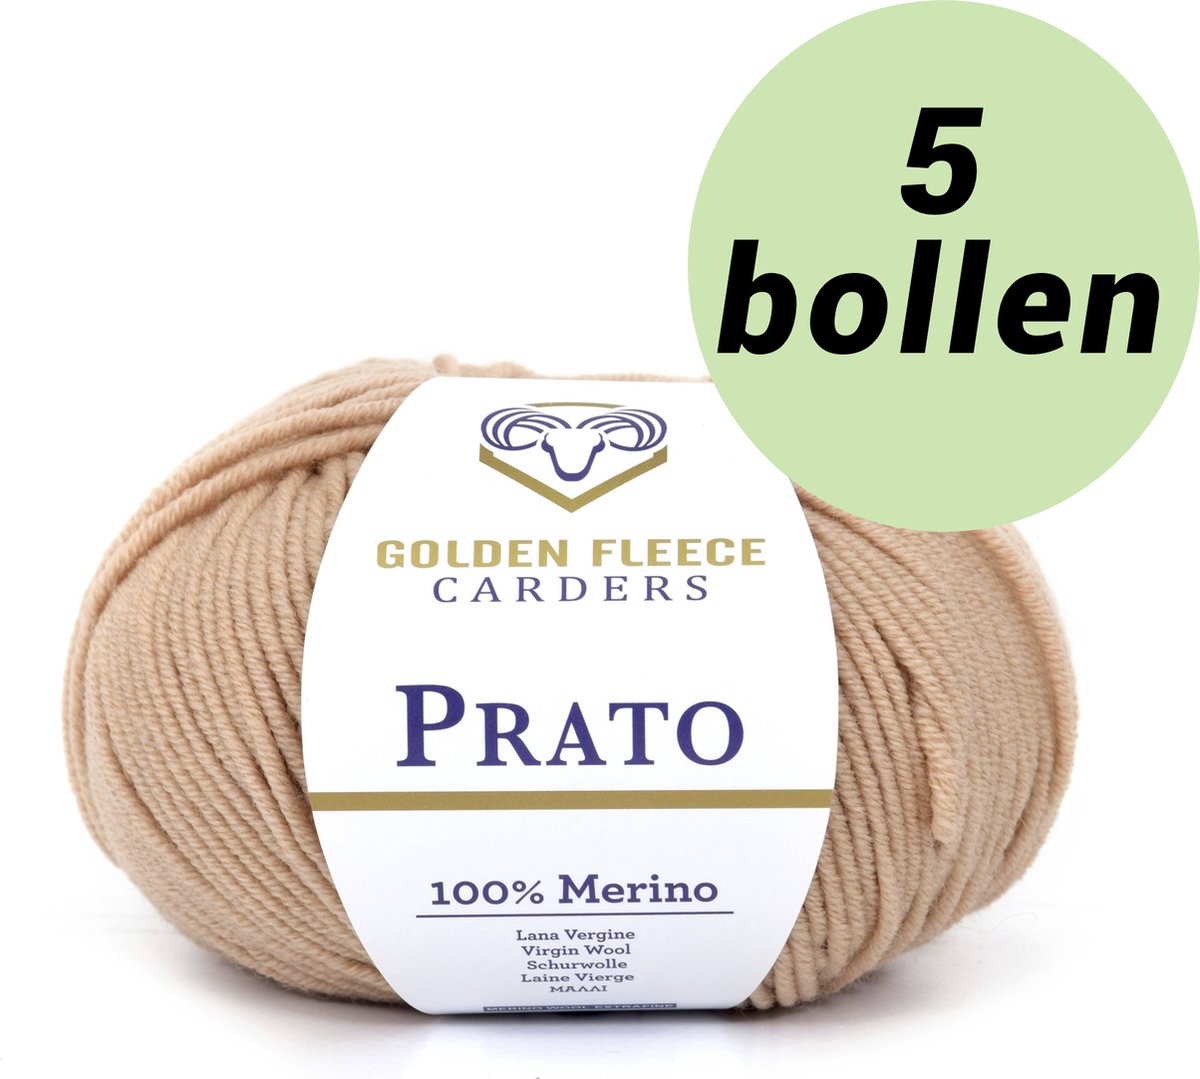 Golden Fleece yarns Prato tan brown - 5 bollen zacht bruin - de zachtste 100% wol